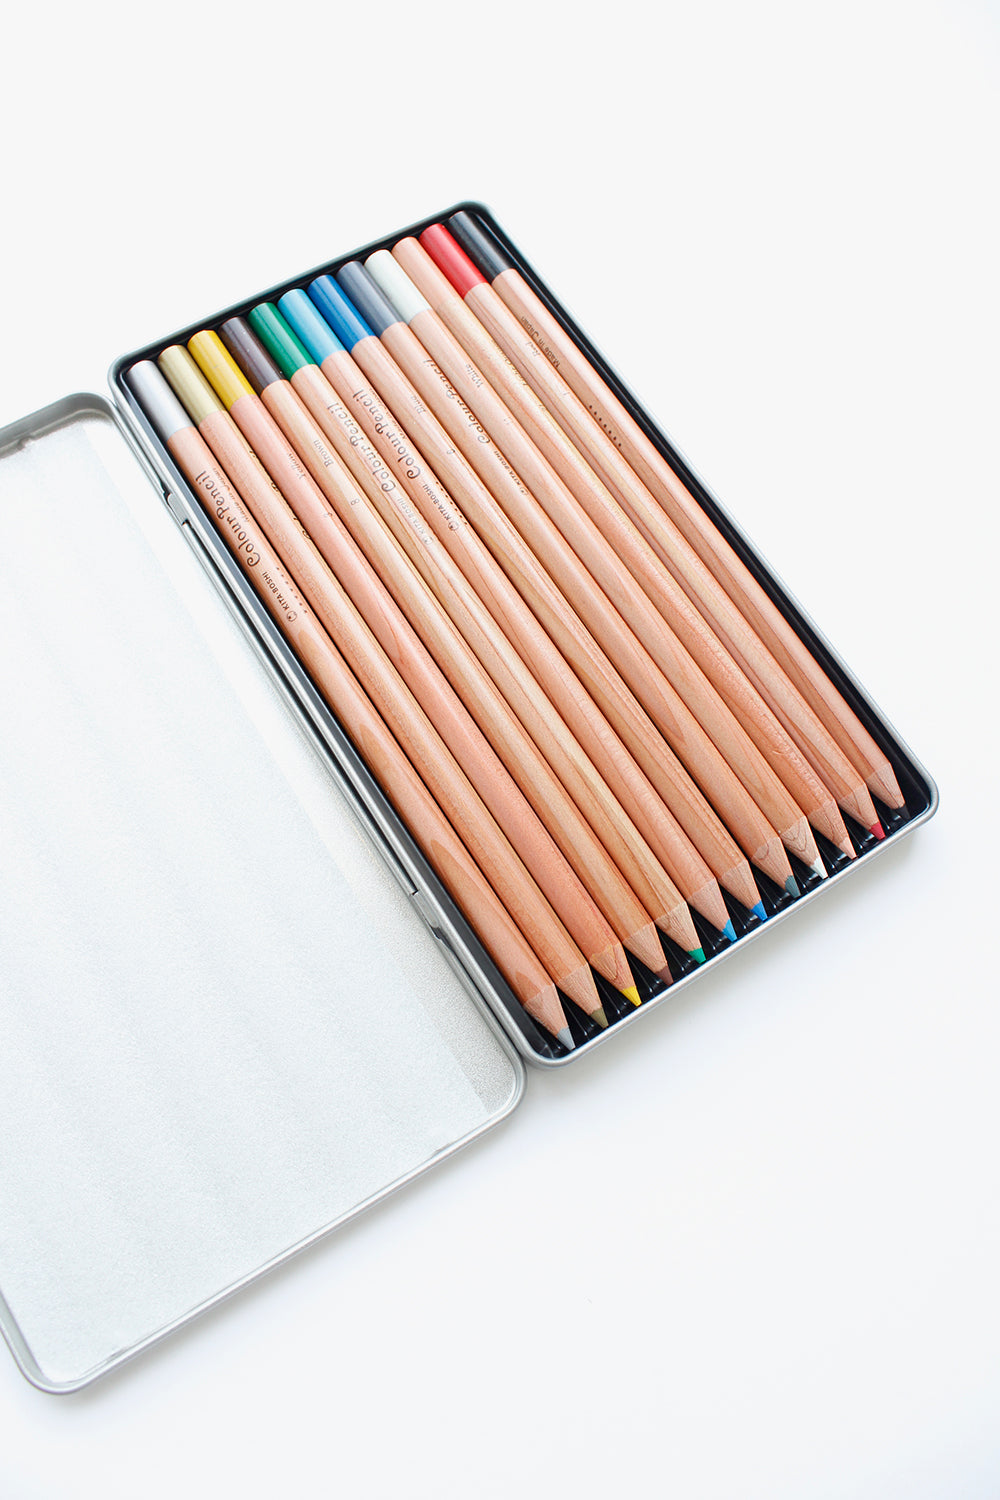 Color Pencil Set of 12